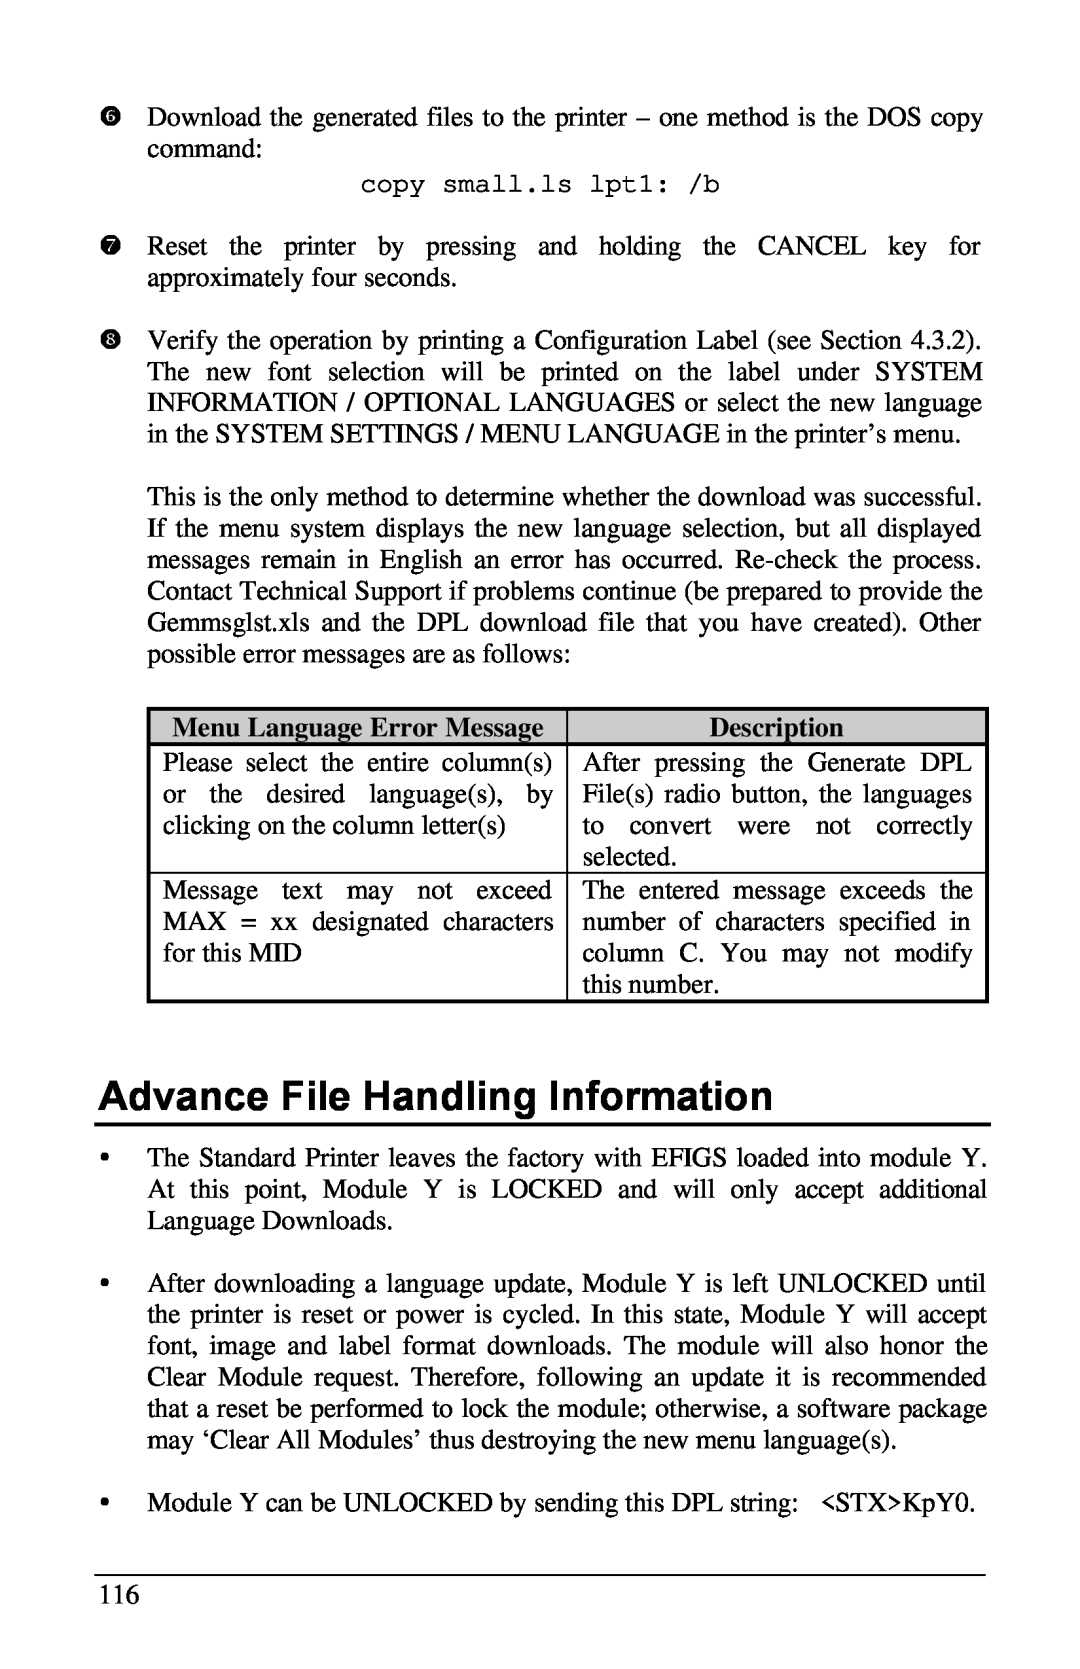 Brady 3481, 6441, 2461 manual Advance File Handling Information, Menu Language Error Message, Description 